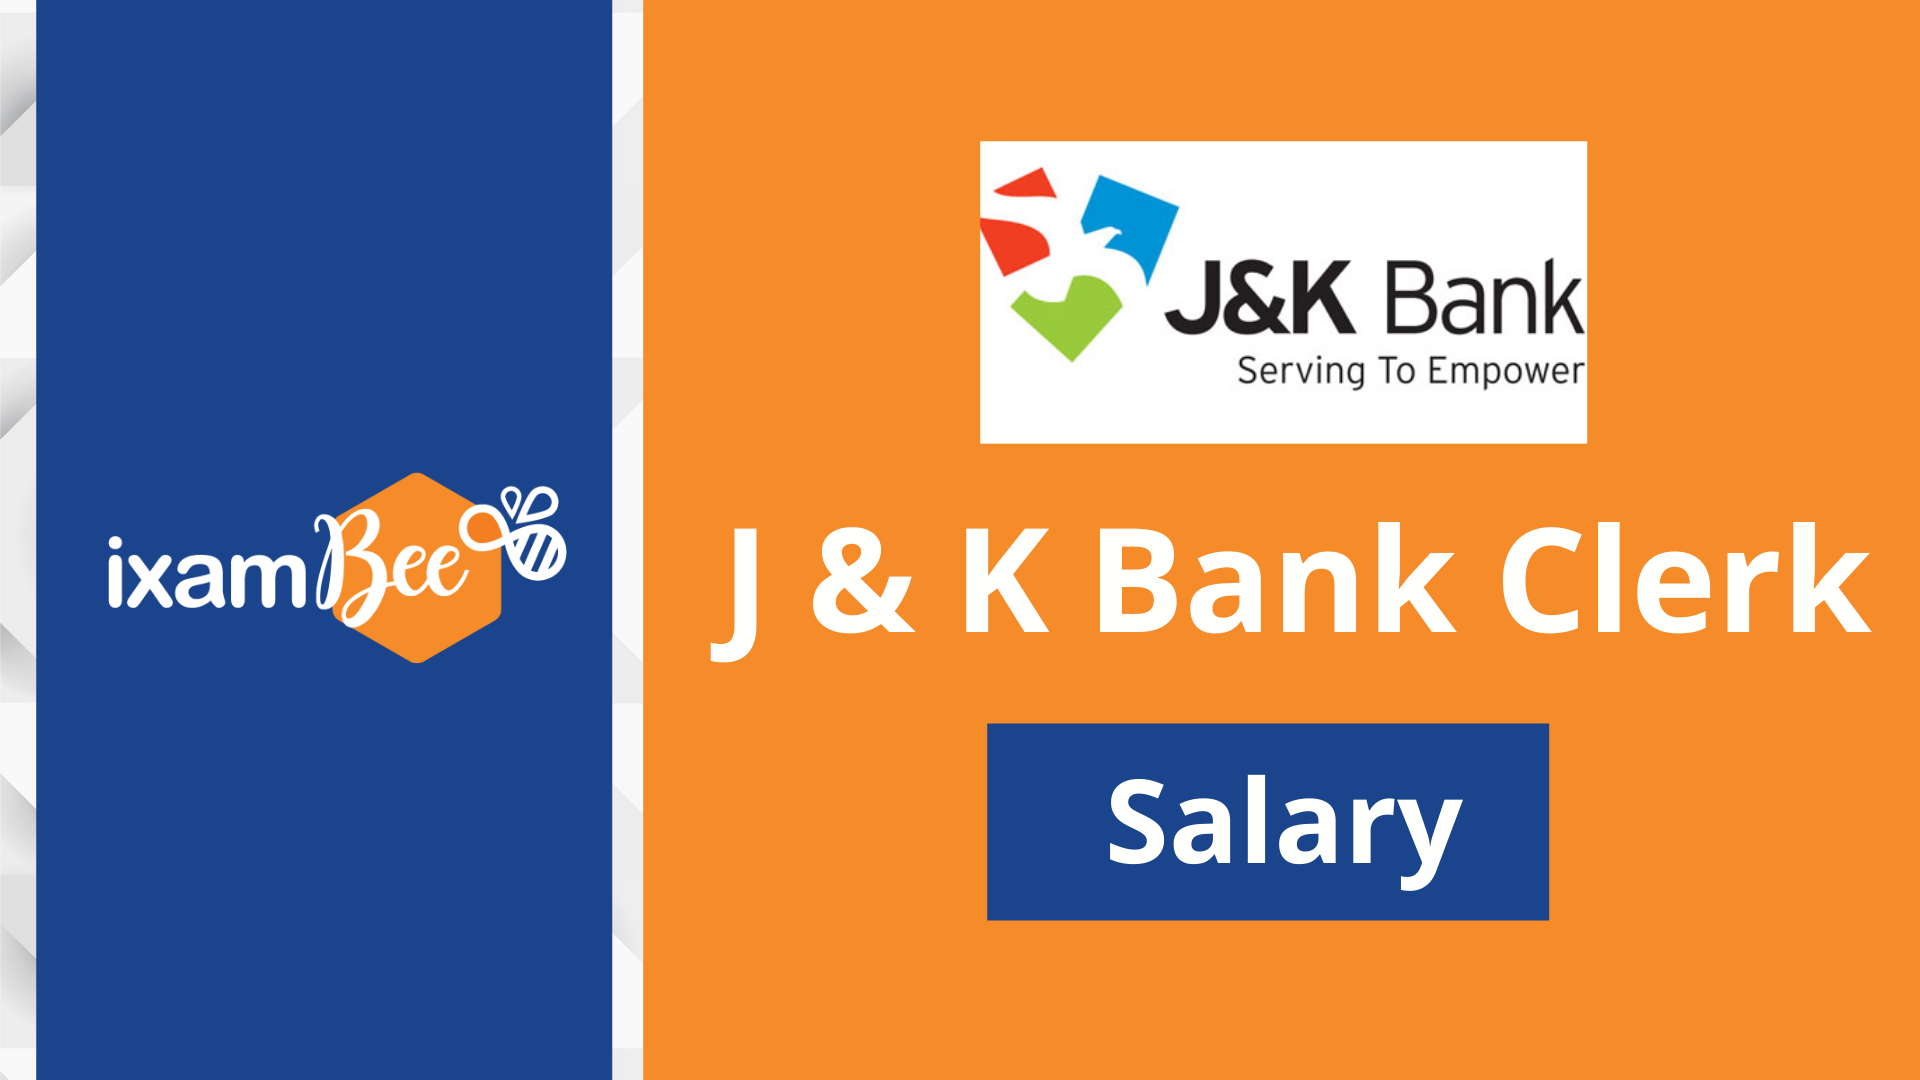 J&K Bank Clerk Salary